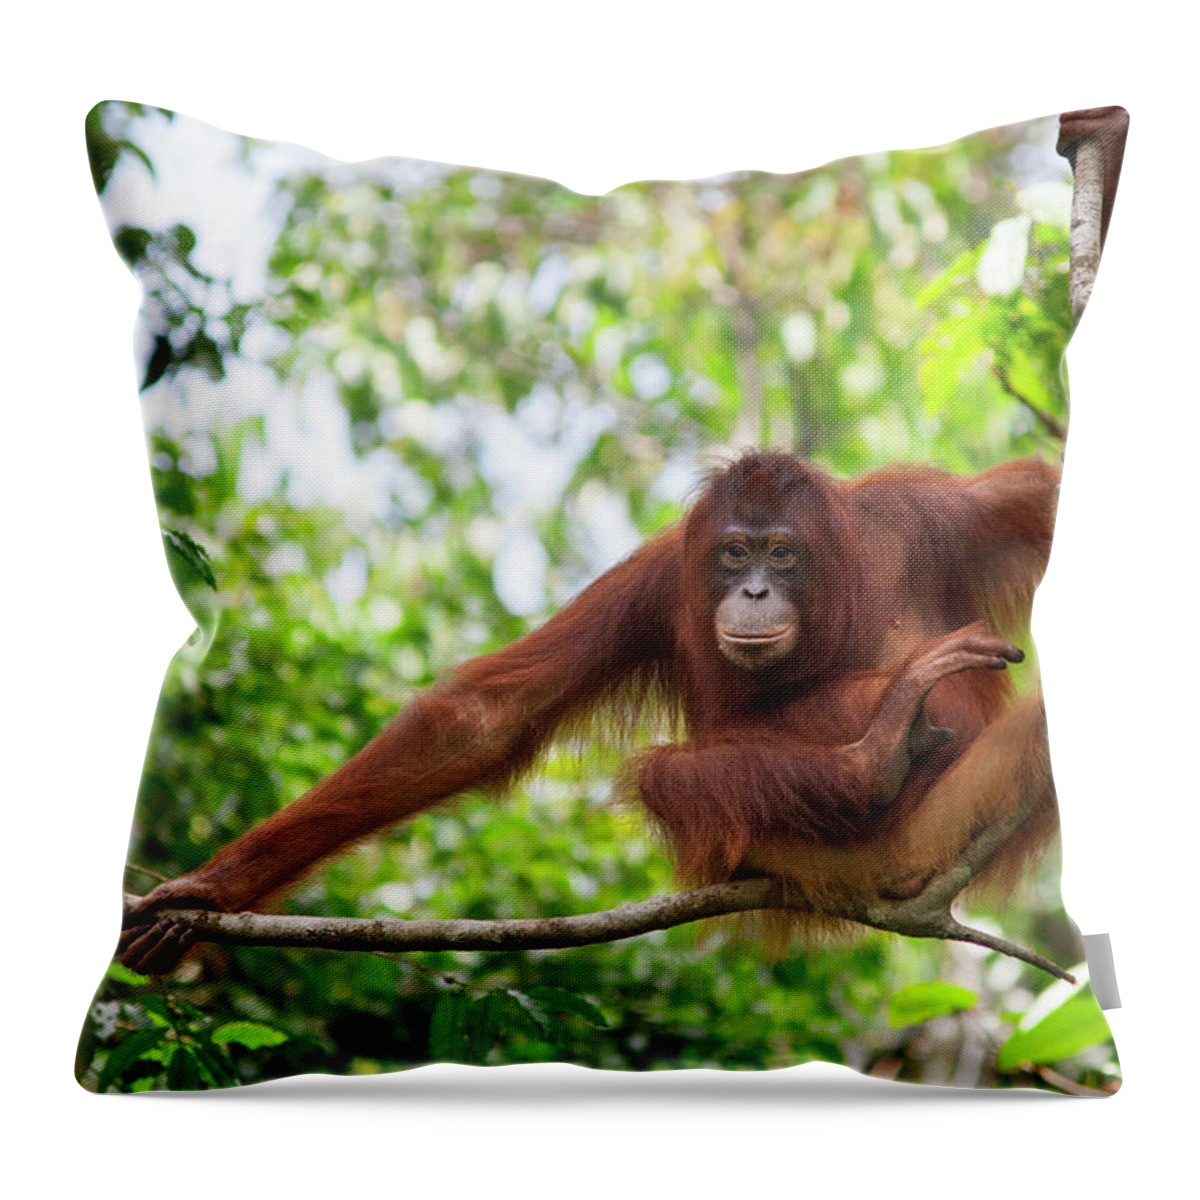 Suzi Eszterhas Throw Pillow featuring the photograph Orangutan Resting In Tree by Suzi Eszterhas